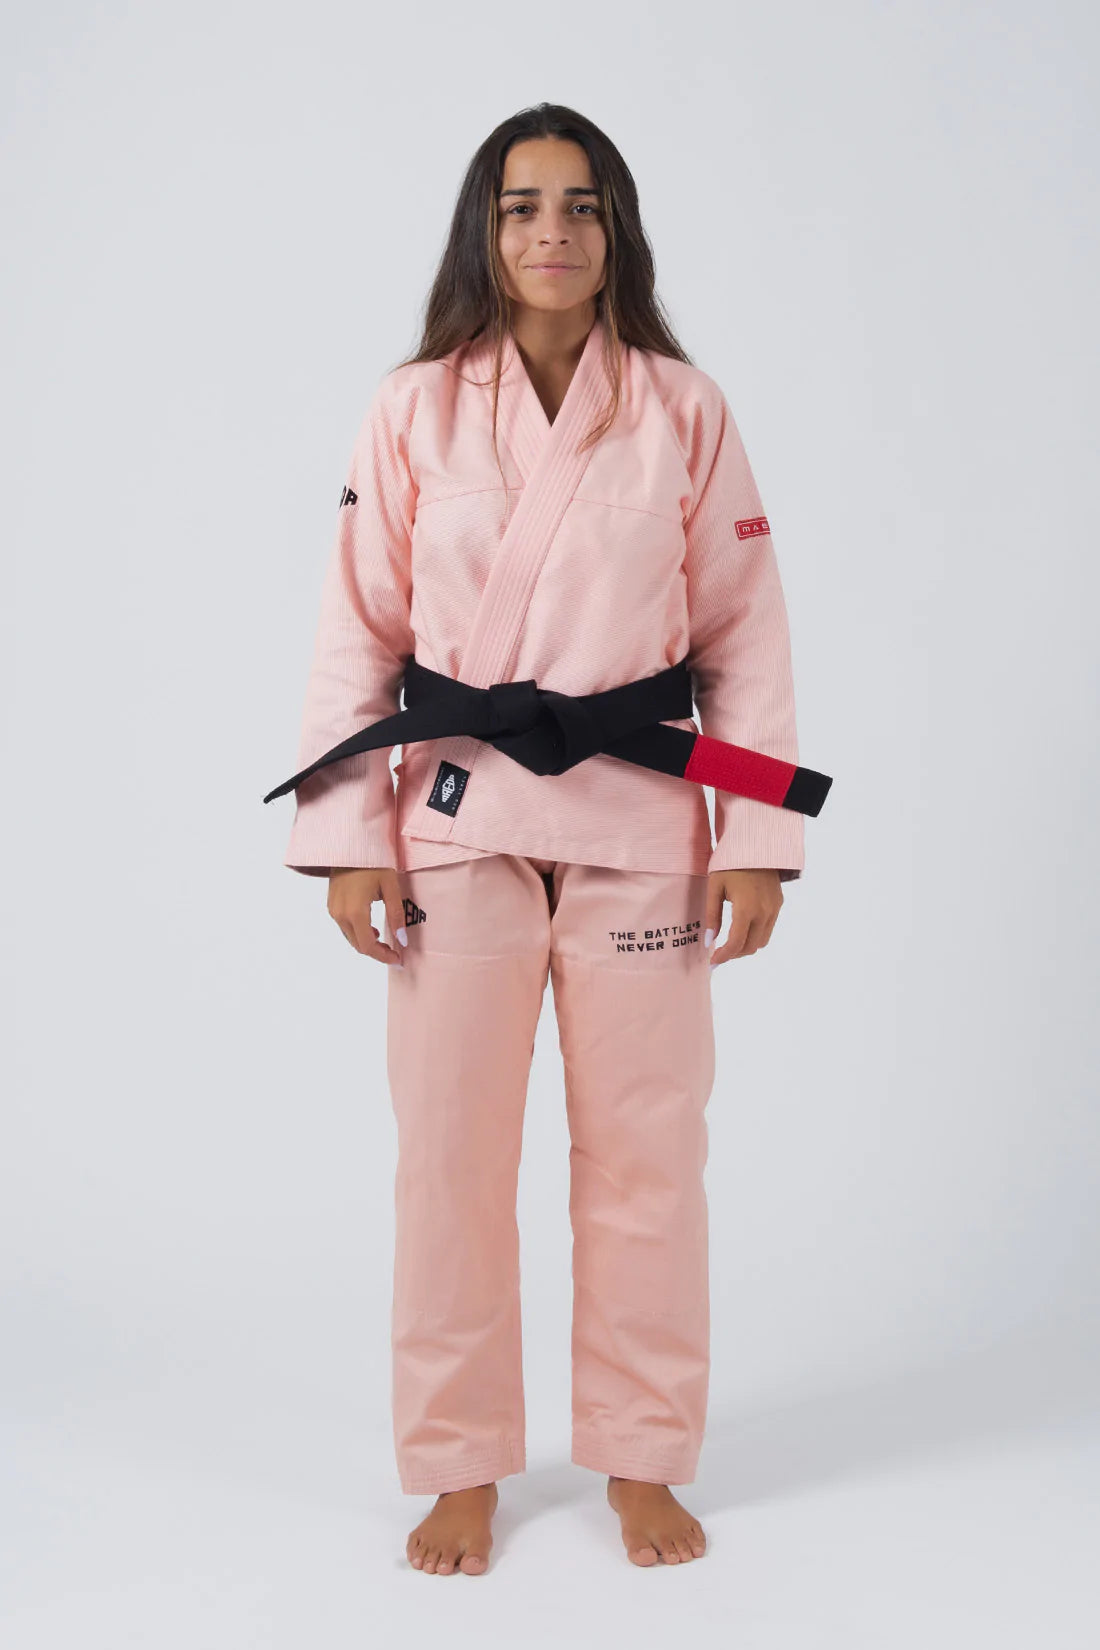 Kimono BJJ (Gi) Red Label 3.0 Peach para mujer CINTURÓN BLANC – StockBJJ